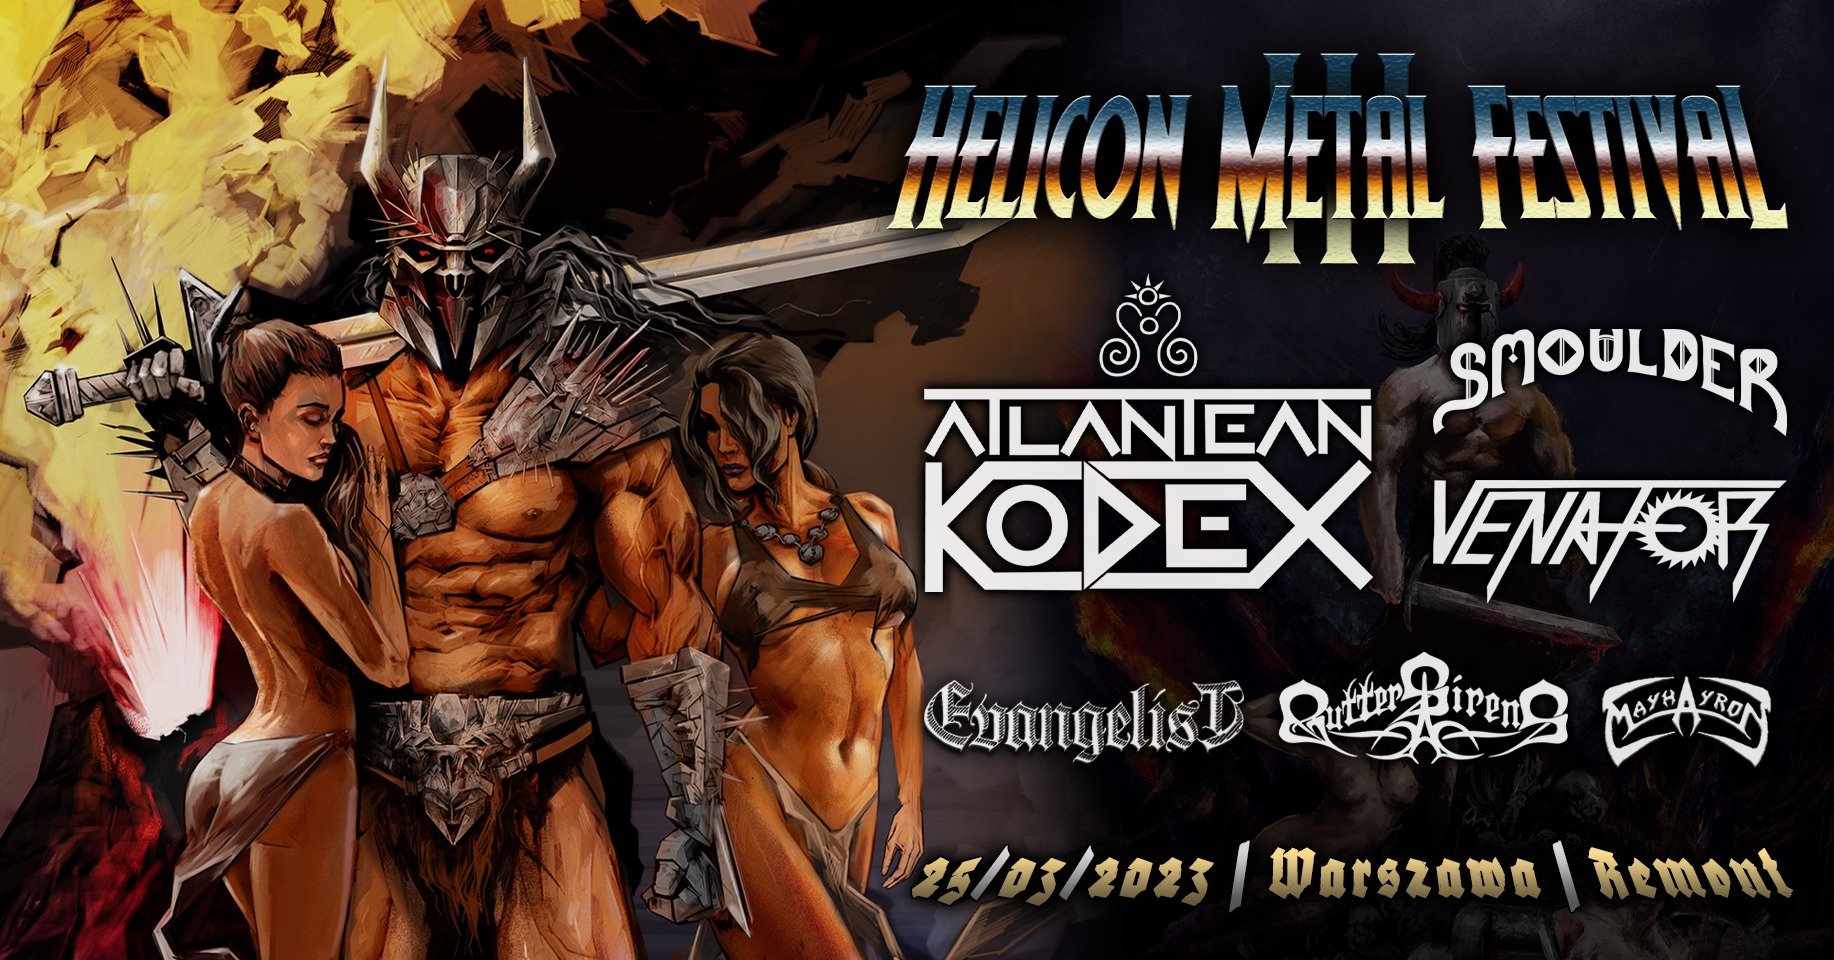 Helicon Metal Festival III / Atlantean Kodex, Smoulder, Venator